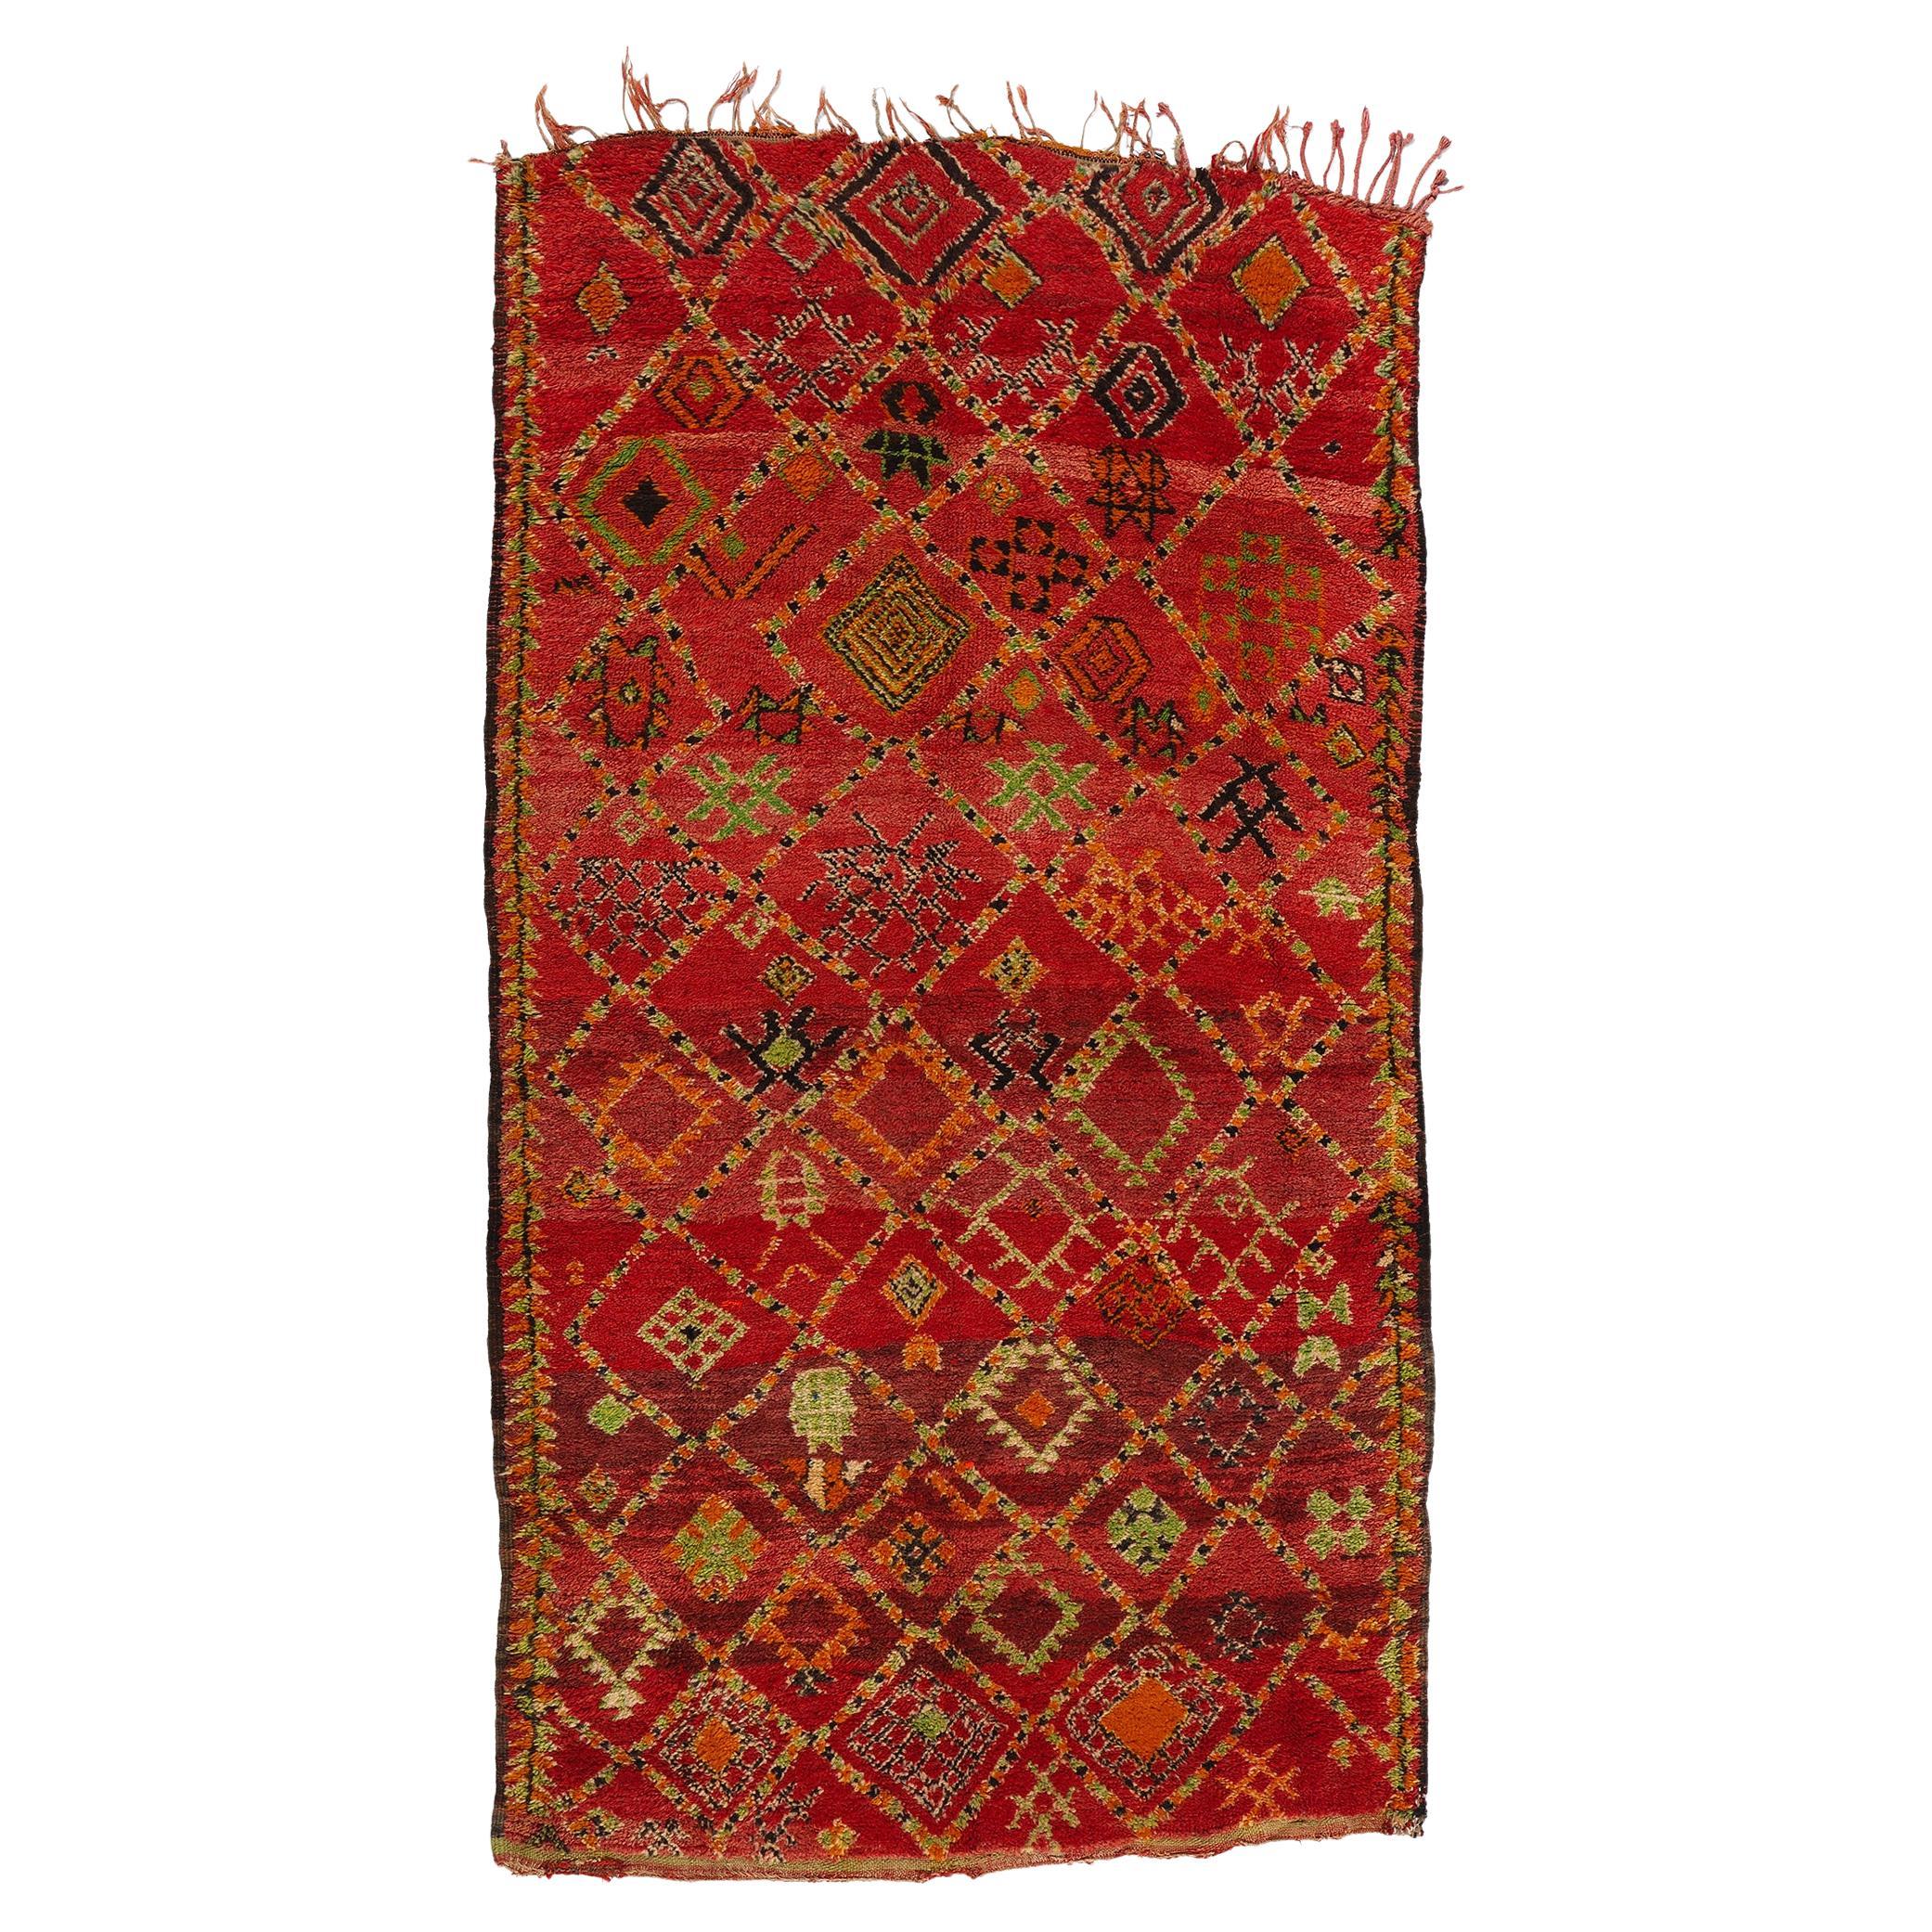 Vintage Beni MGuild Moroccan Rug